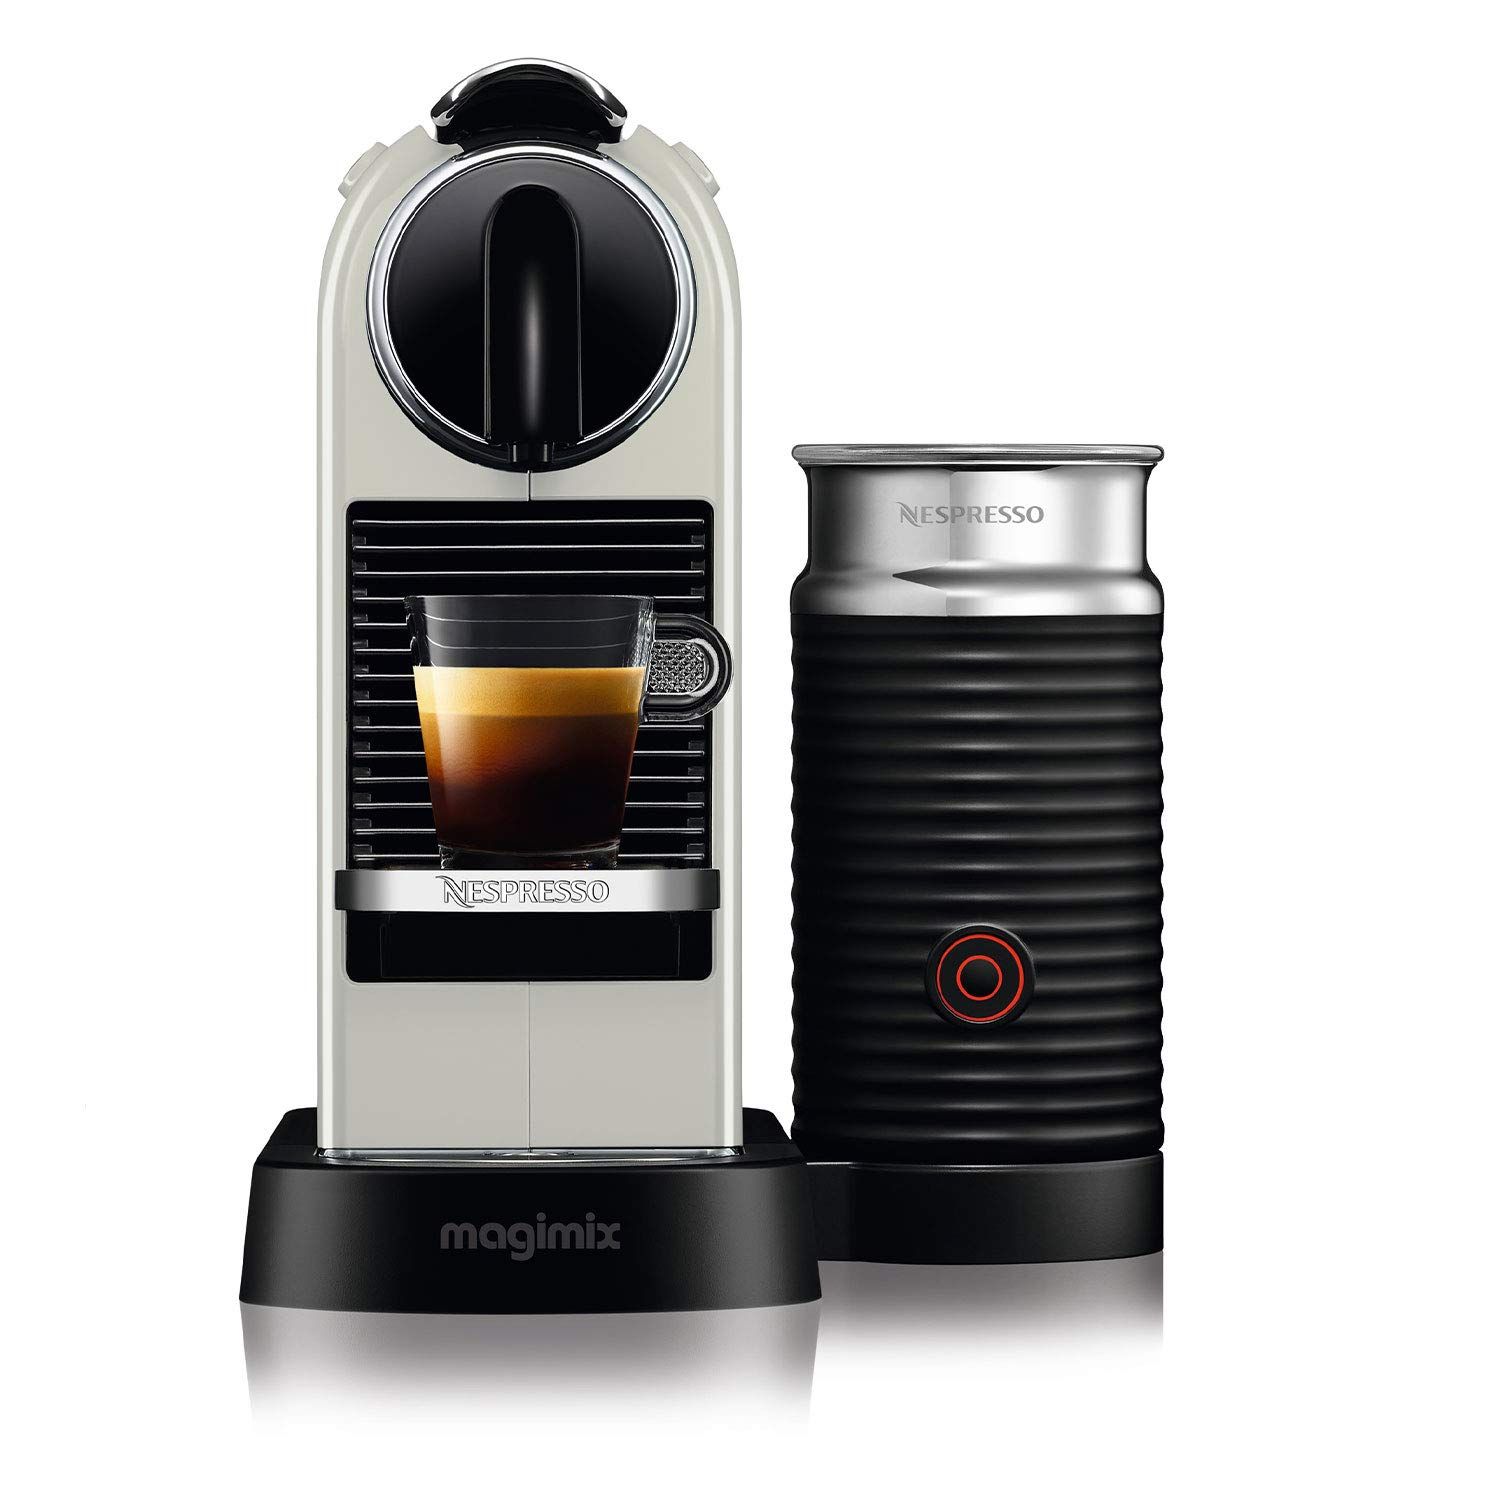 Nespresso Citiz Automatic Pod Coffee Machine with Milk Frother for Espresso, Cappuccino and Flat White by Magimix in White | Amazon (UK)